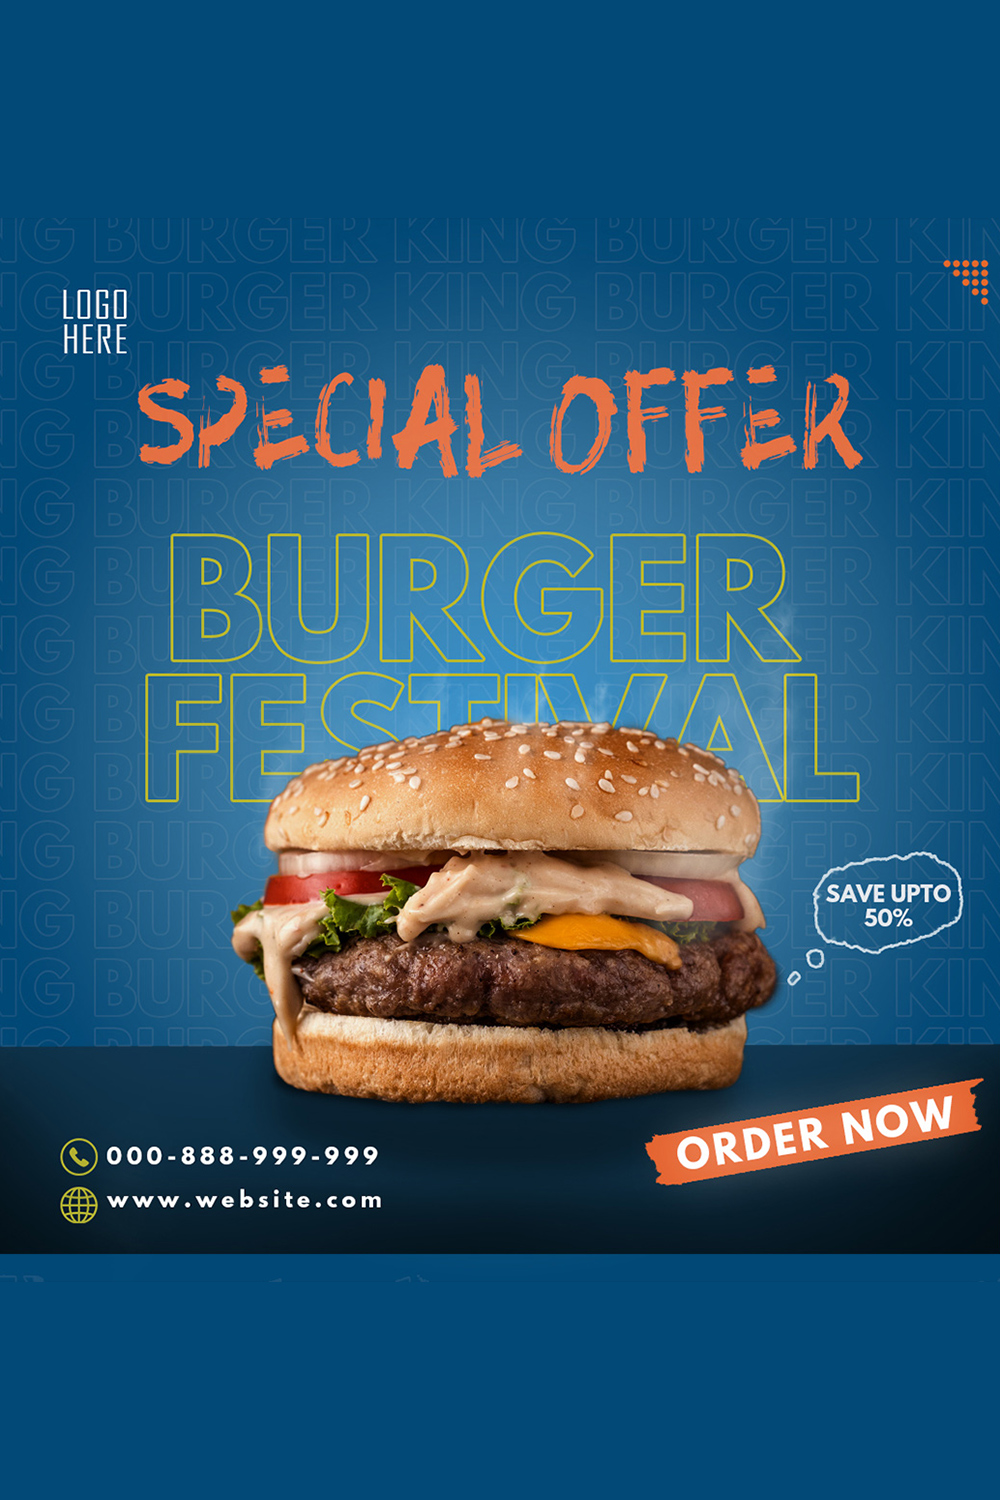 Burger Flyer Template - Social Media Post pinterest.